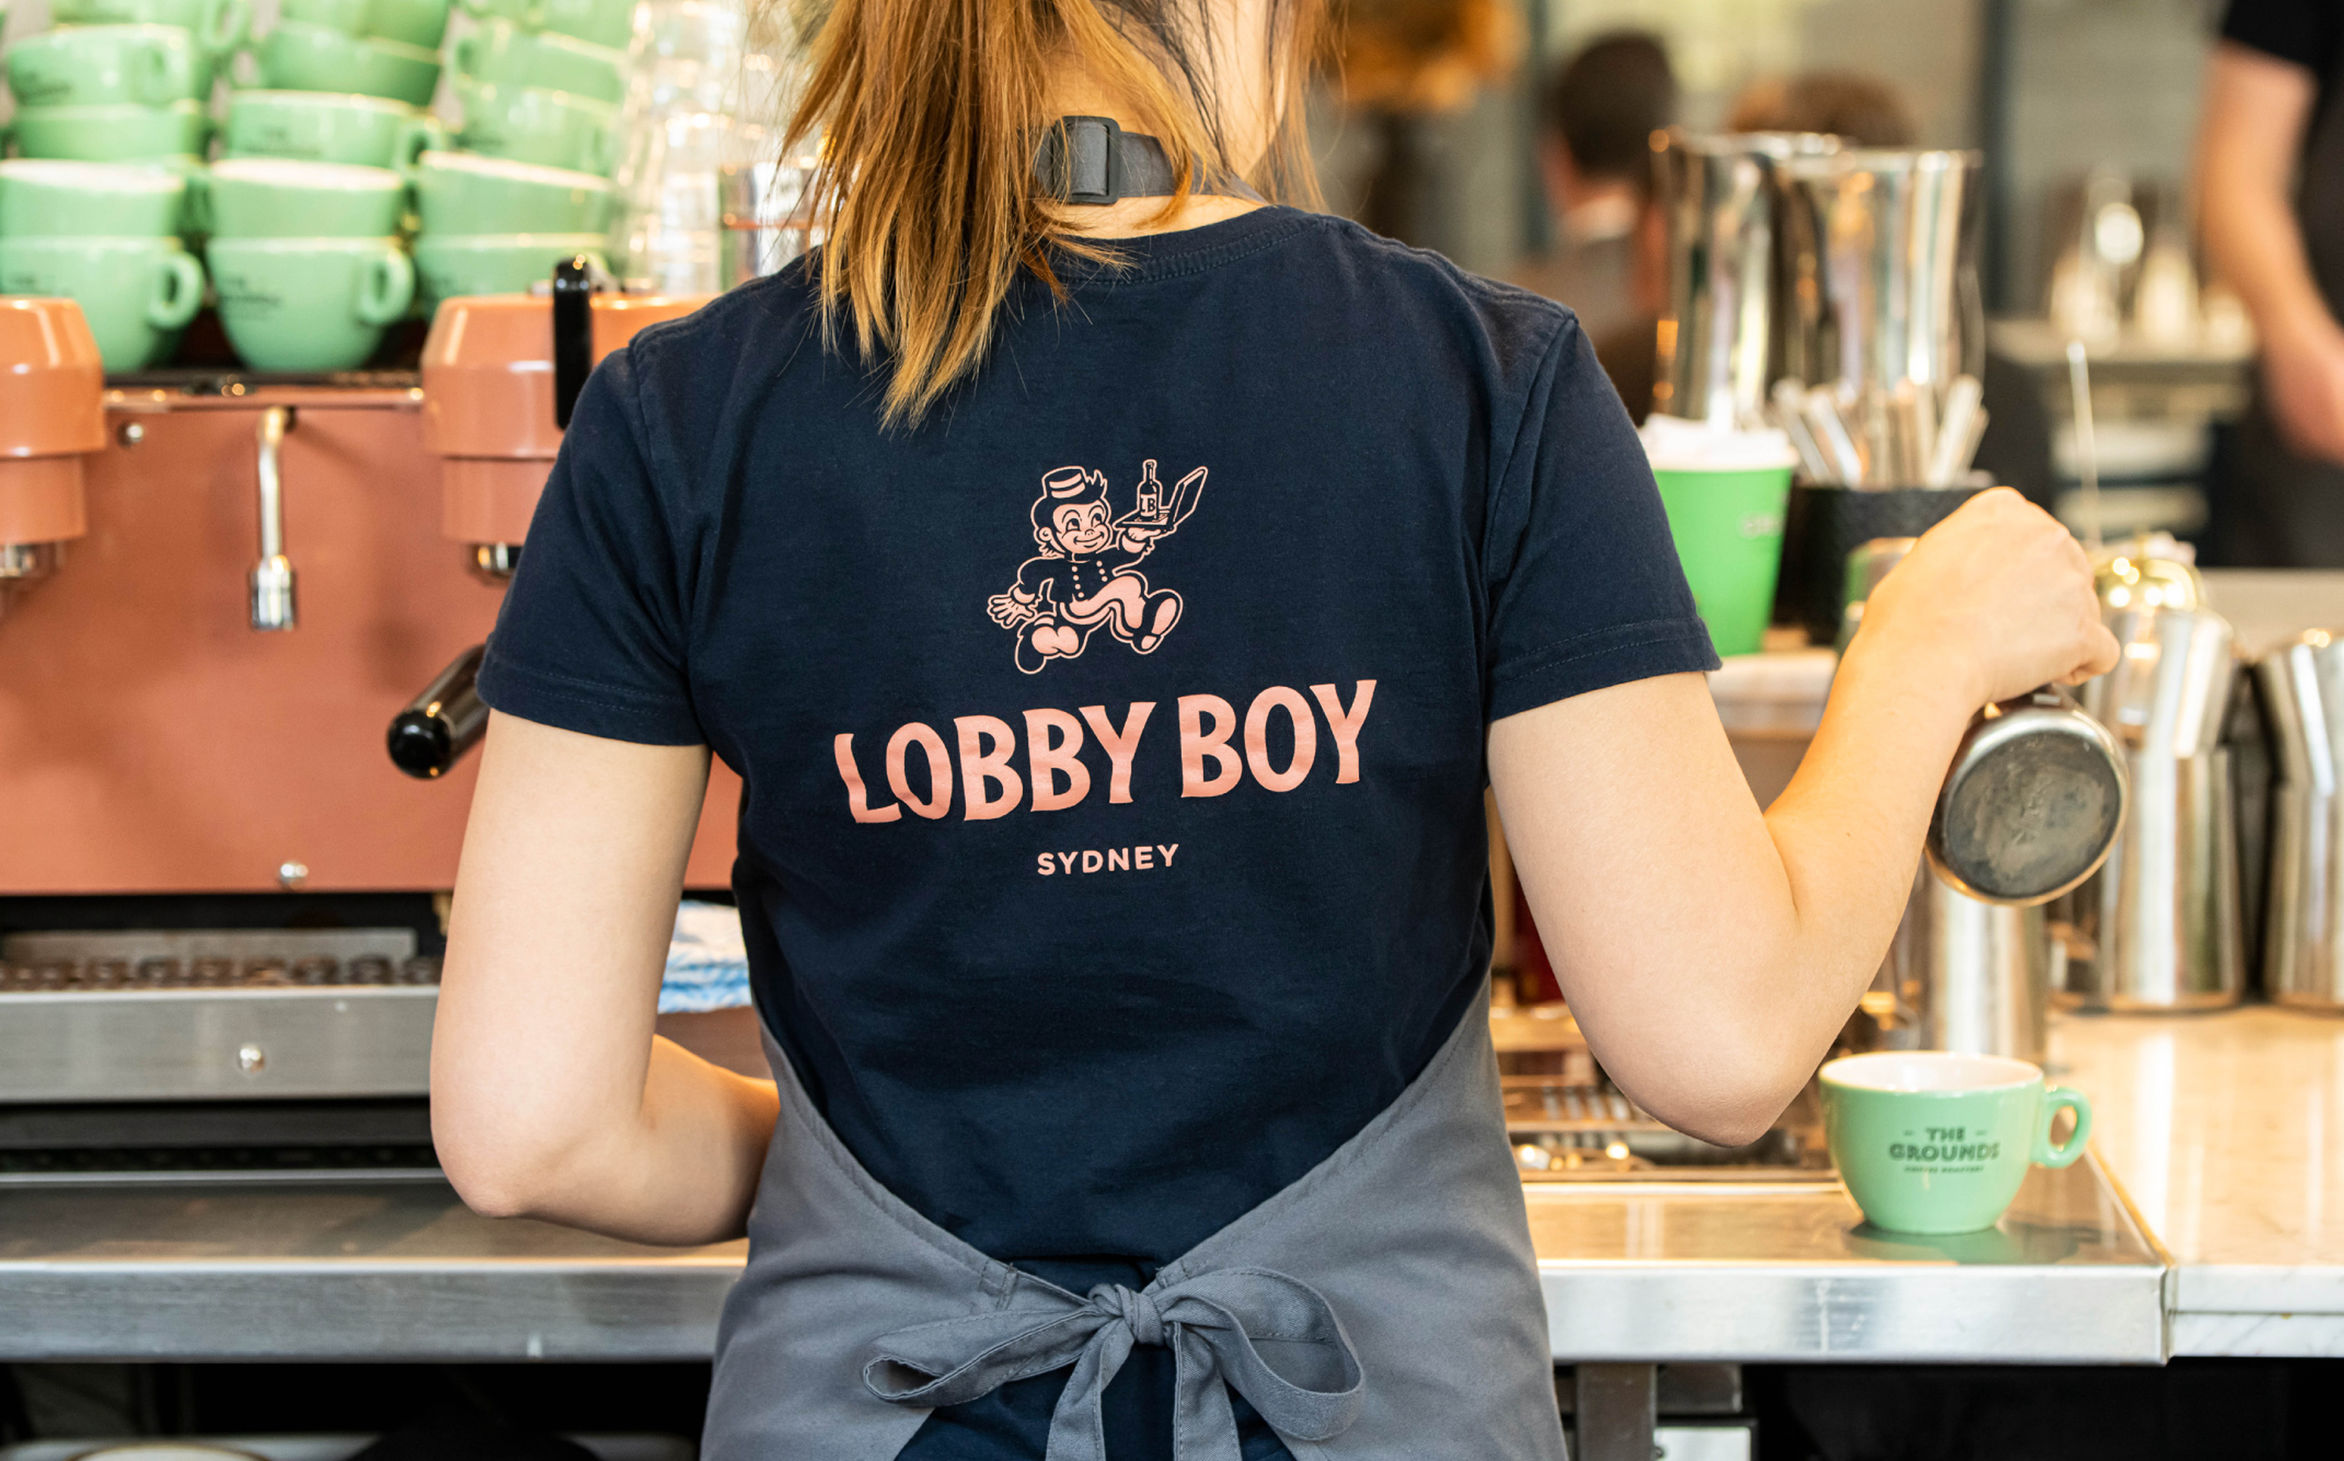 mejores-logos-2020-2021-lobby-boy-04